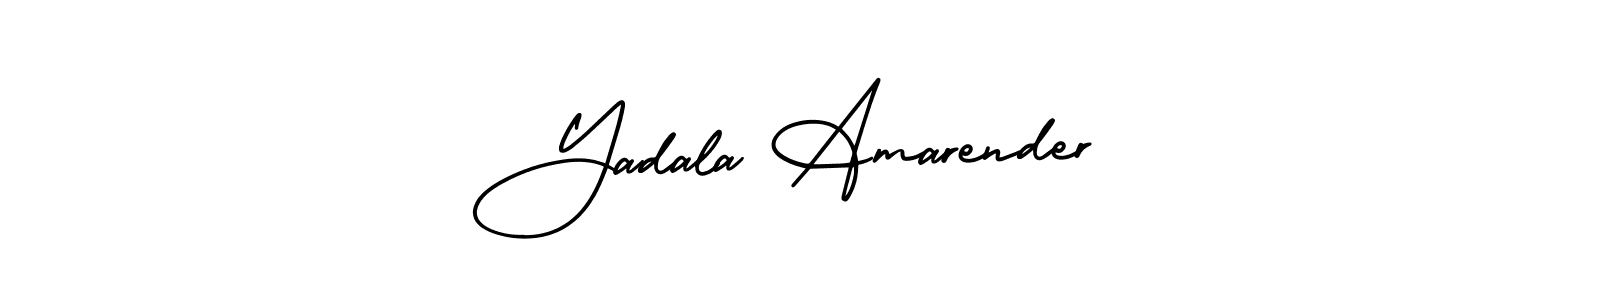 How to Draw Yadala Amarender signature style? AmerikaSignatureDemo-Regular is a latest design signature styles for name Yadala Amarender. Yadala Amarender signature style 3 images and pictures png